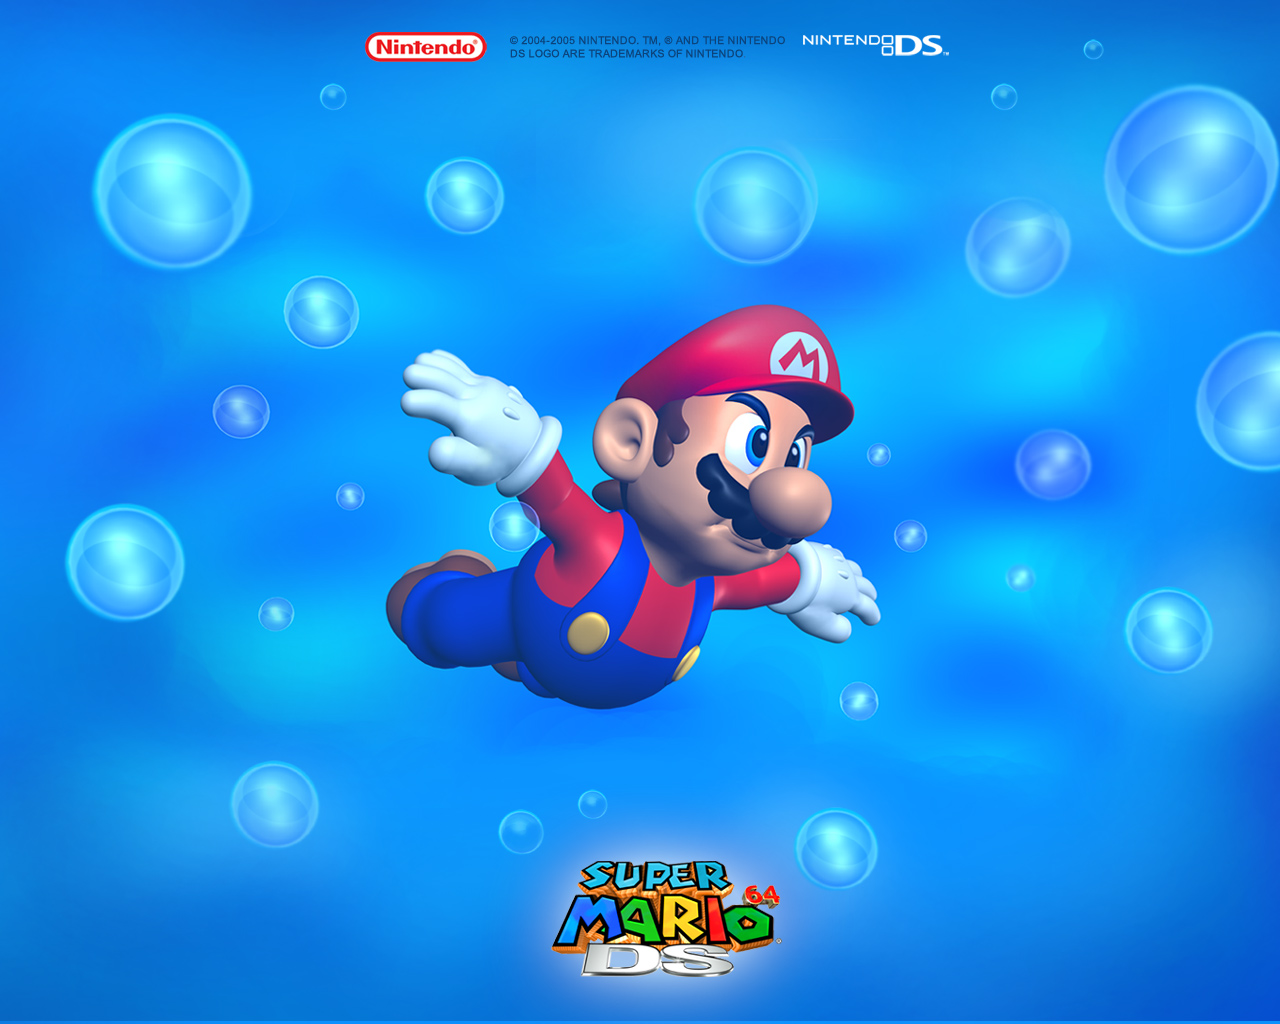 Super Mario 64 DS - Nintendo Wallpaper (25771381) - Fanpop